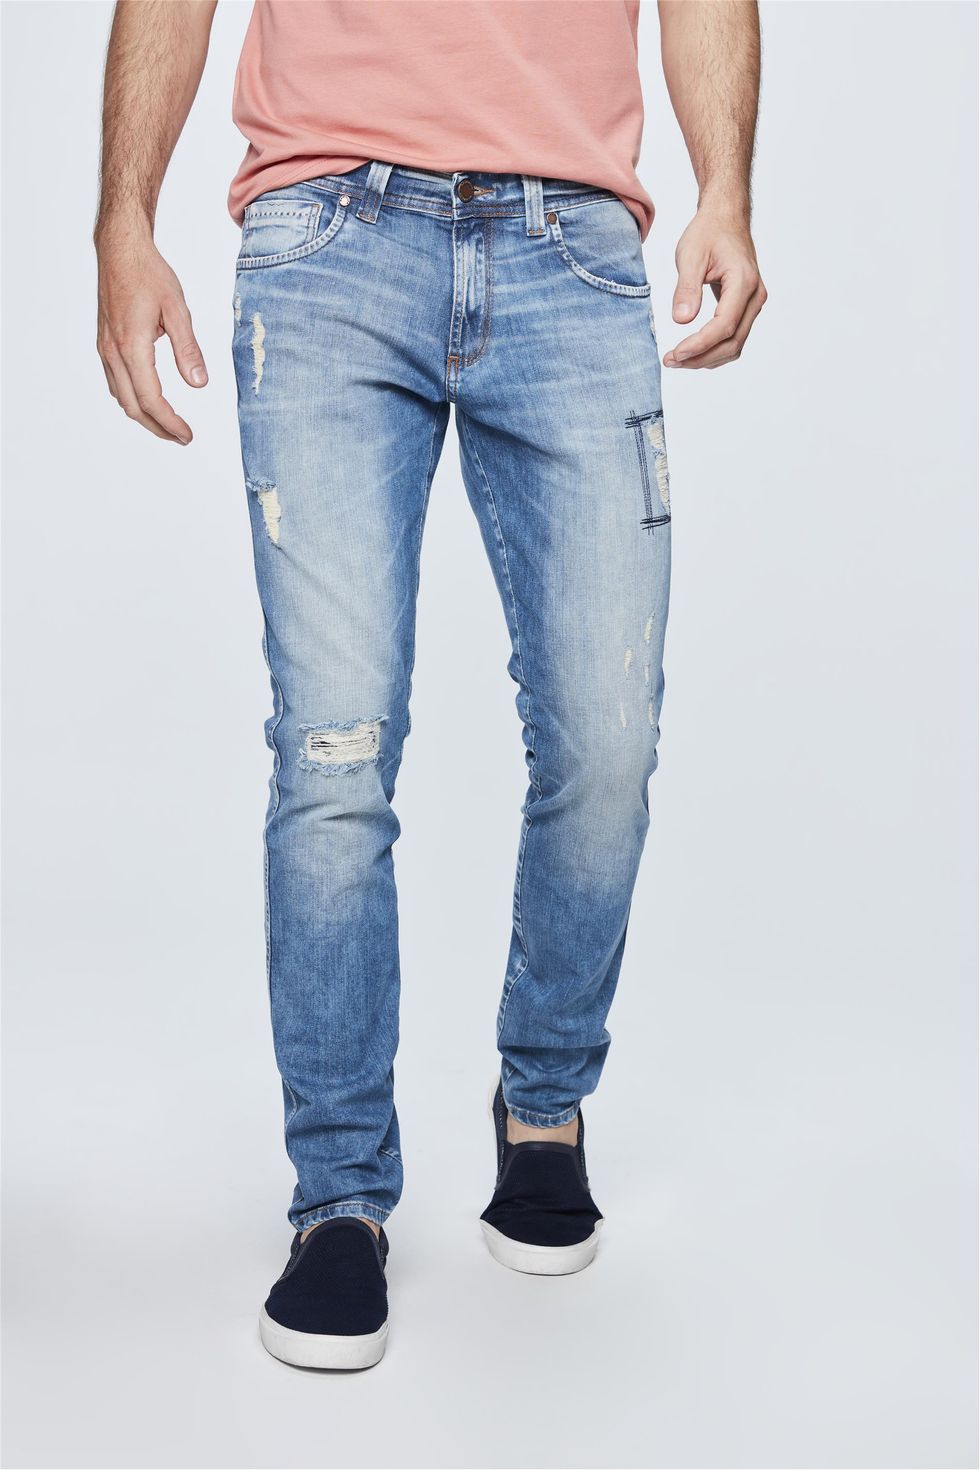 calça jeans damyller masculina